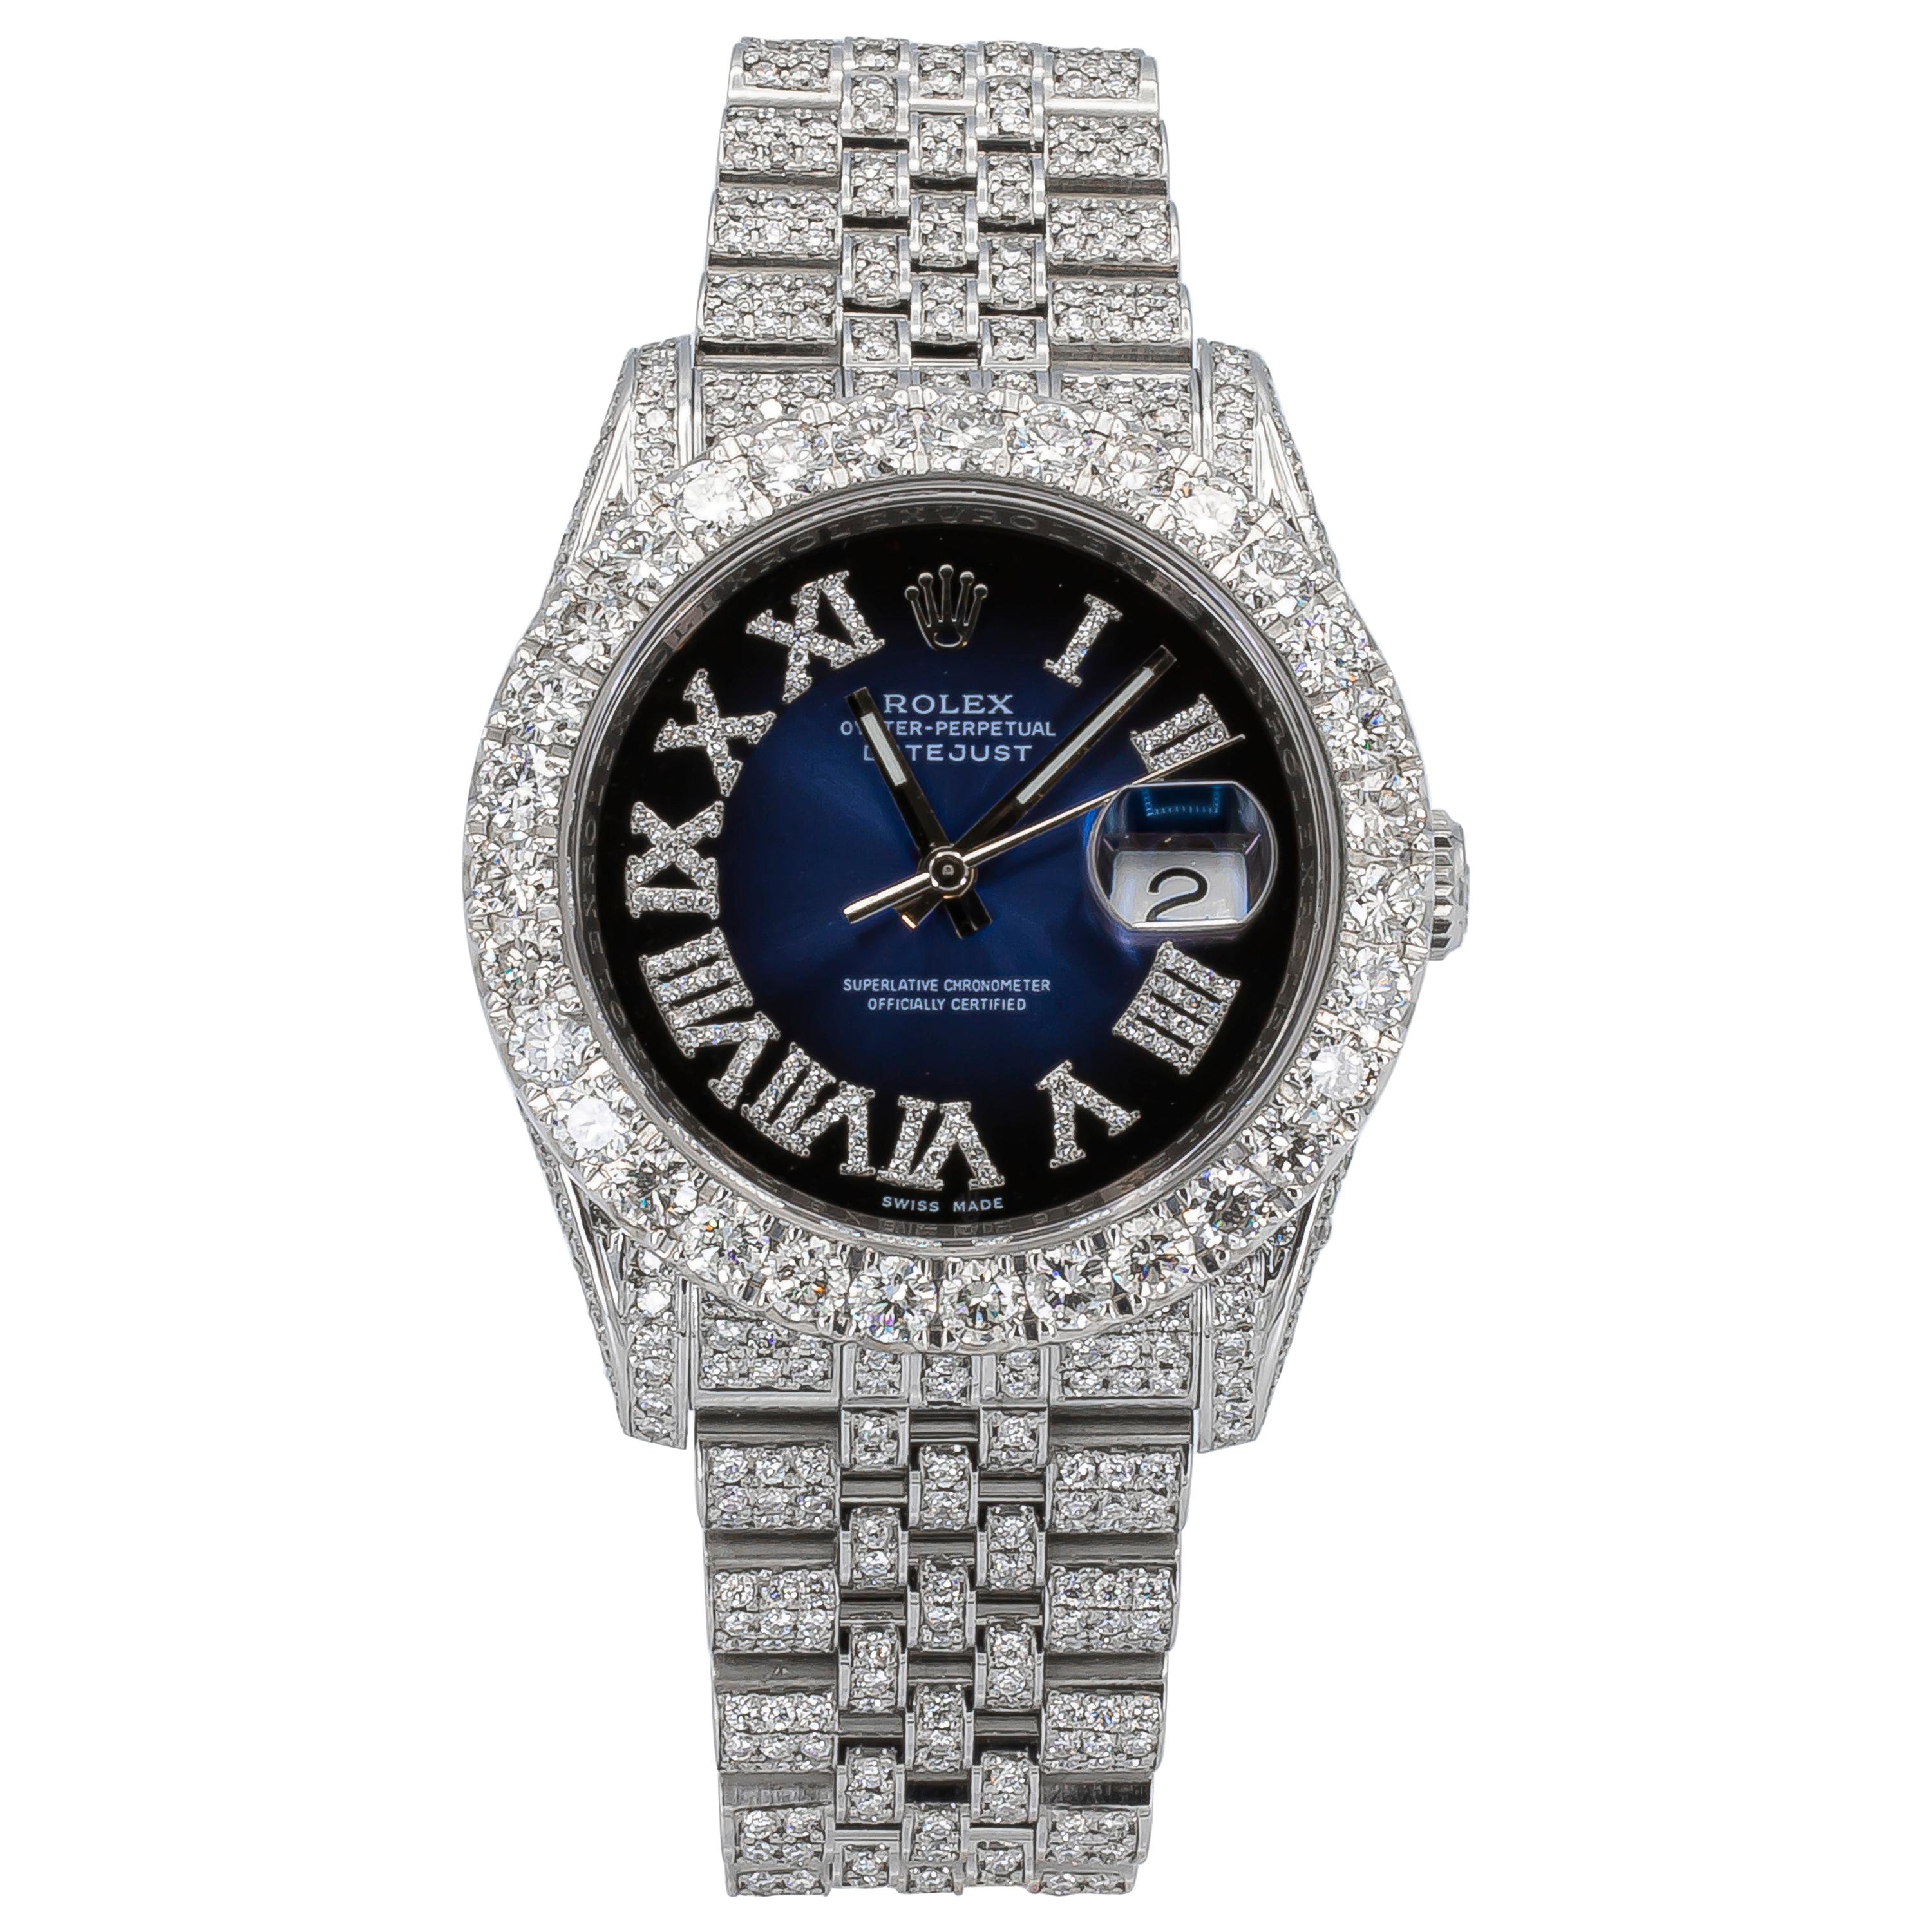 Custom Design Rolex Watch with 21 Carat of White Diamonds